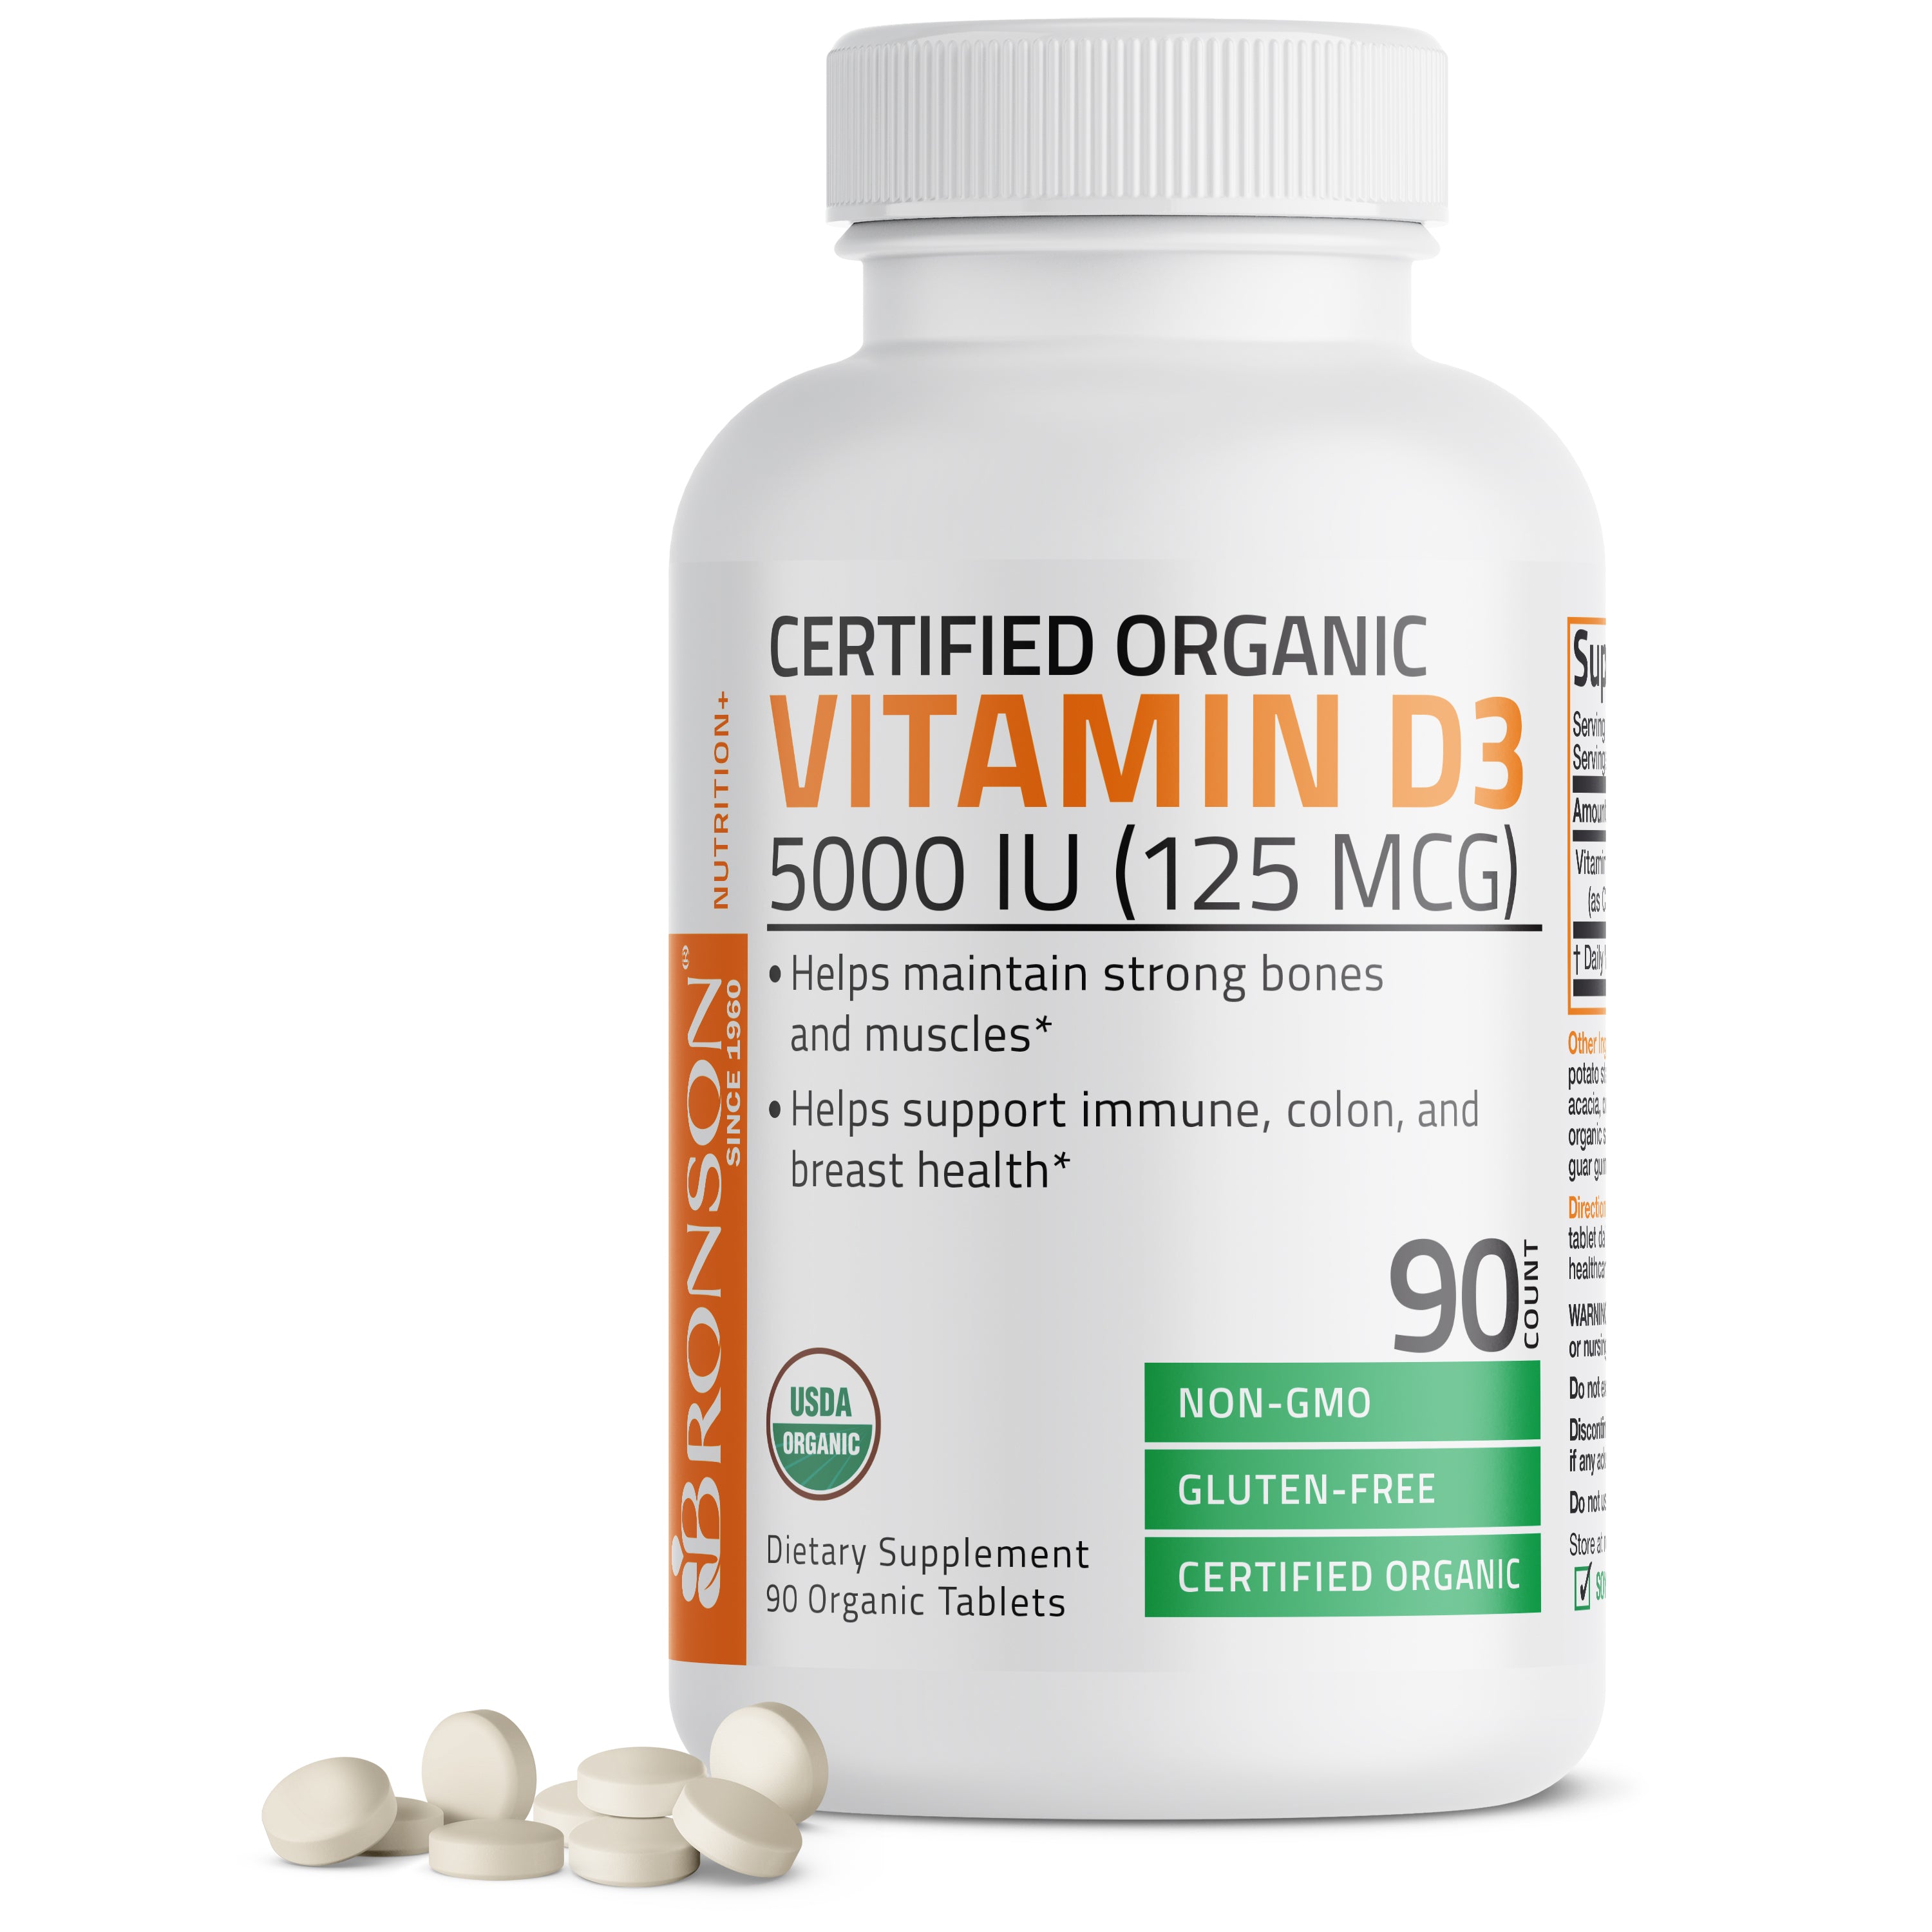 Vitamin D3 USDA Certified Organic - 5,000 IU view 9 of 6